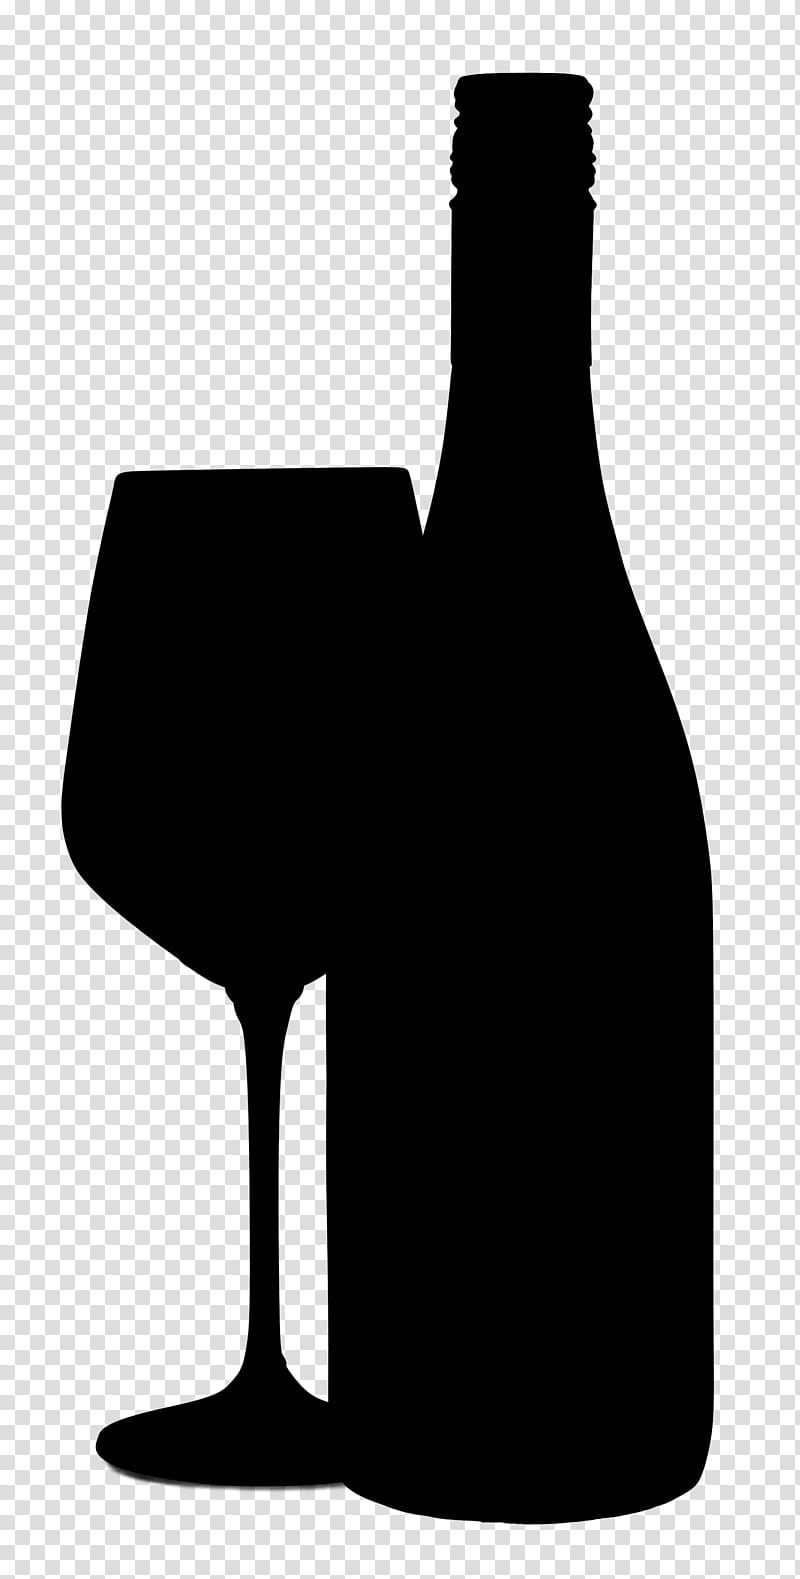 Wine Glass, Glass Bottle, Stemware, Sake, Silhouette, Black, Wine Bottle, Alcohol transparent background PNG clipart